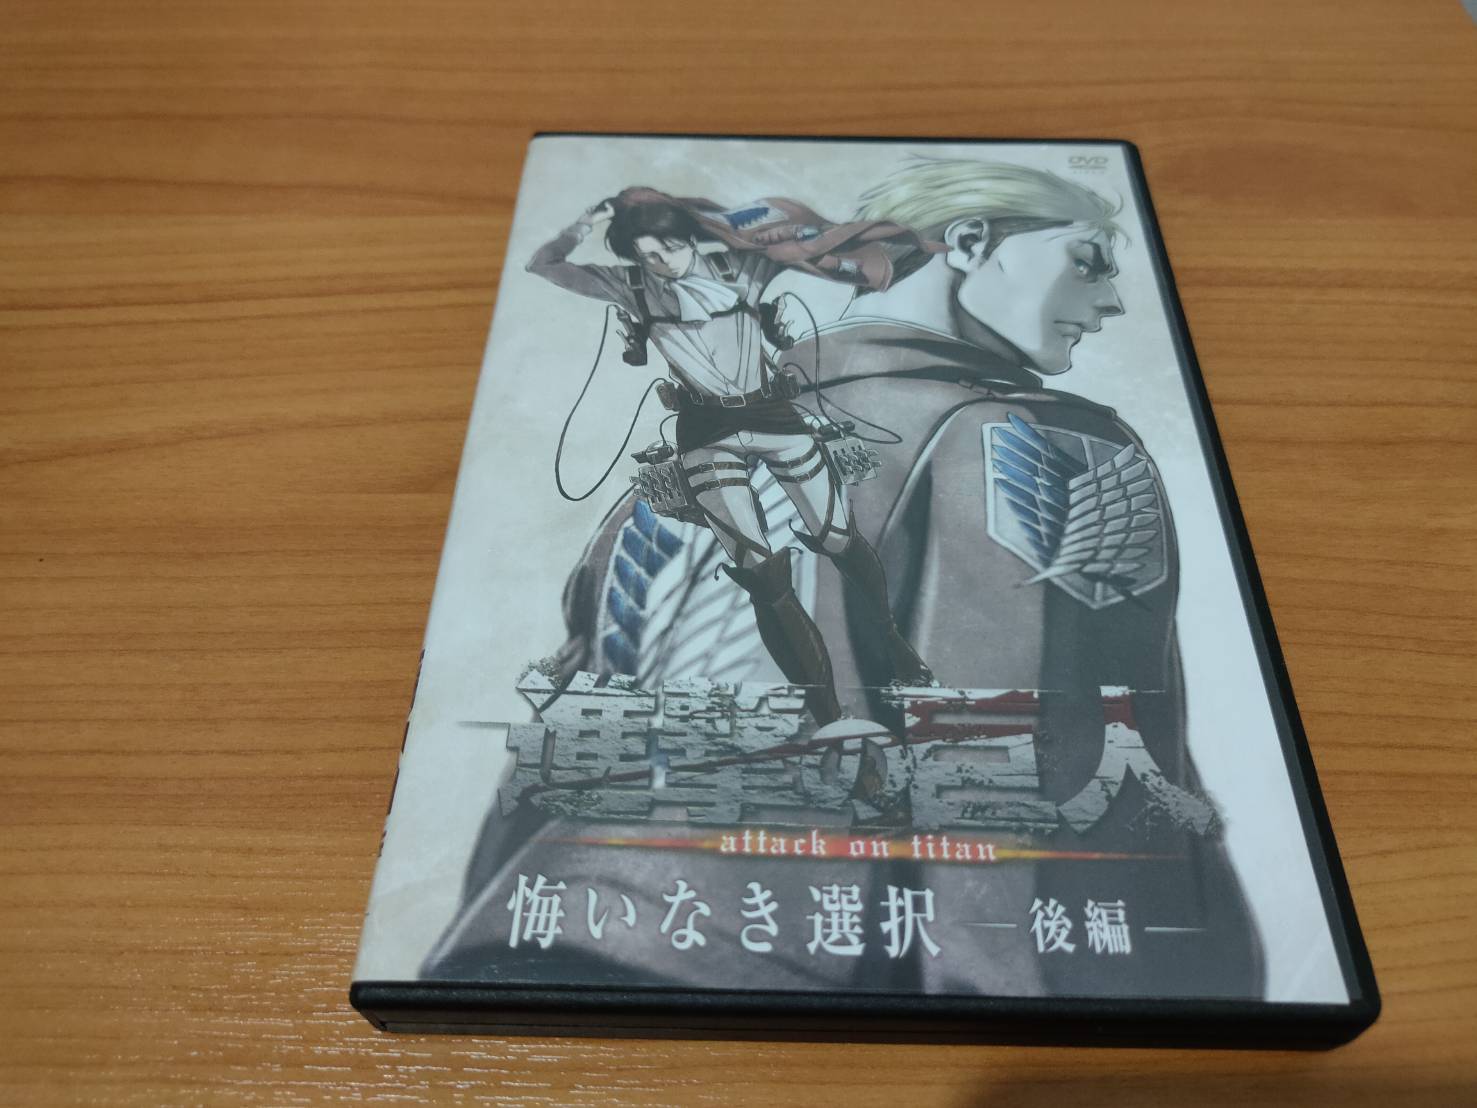 DVD  ATTACK ON TITAN  悔い なき 選択  (โปรดดูภาพสินค้าอย่างละเอียดก่อนทำการสั่งซื้อ)